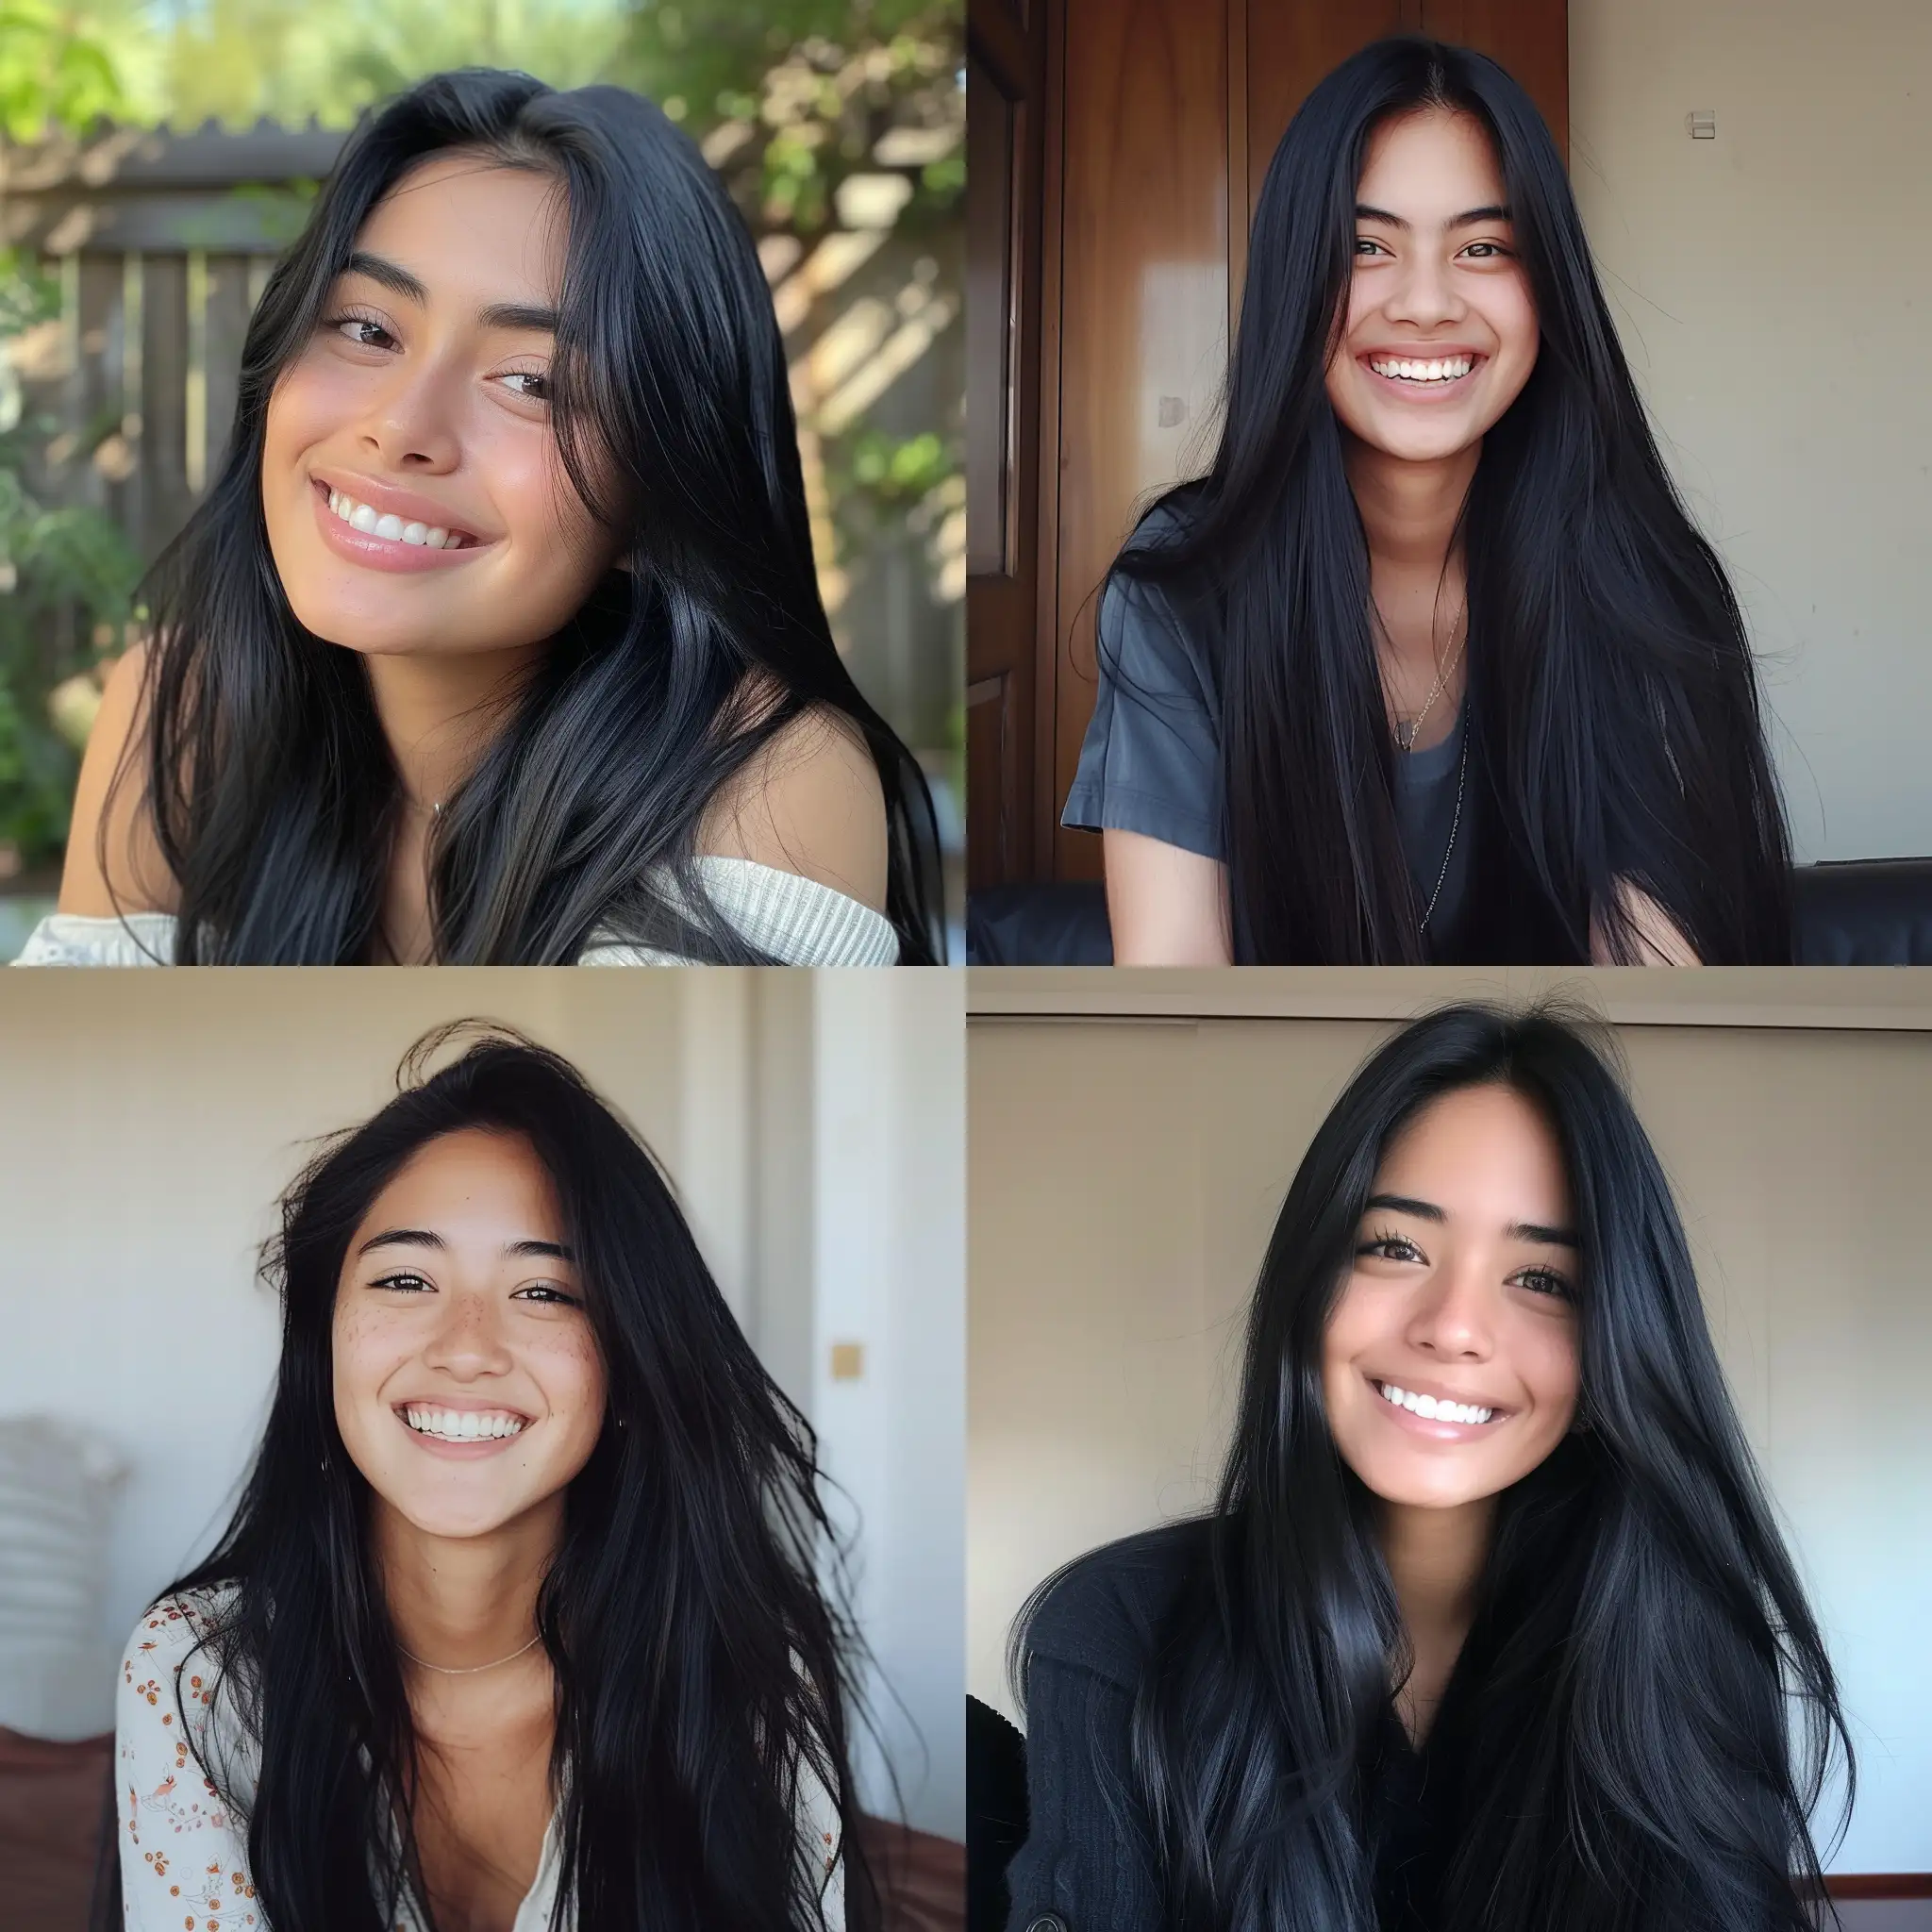 Smiling-Girl-with-Long-Black-Hair-Aesthetic-Instagram-Portrait